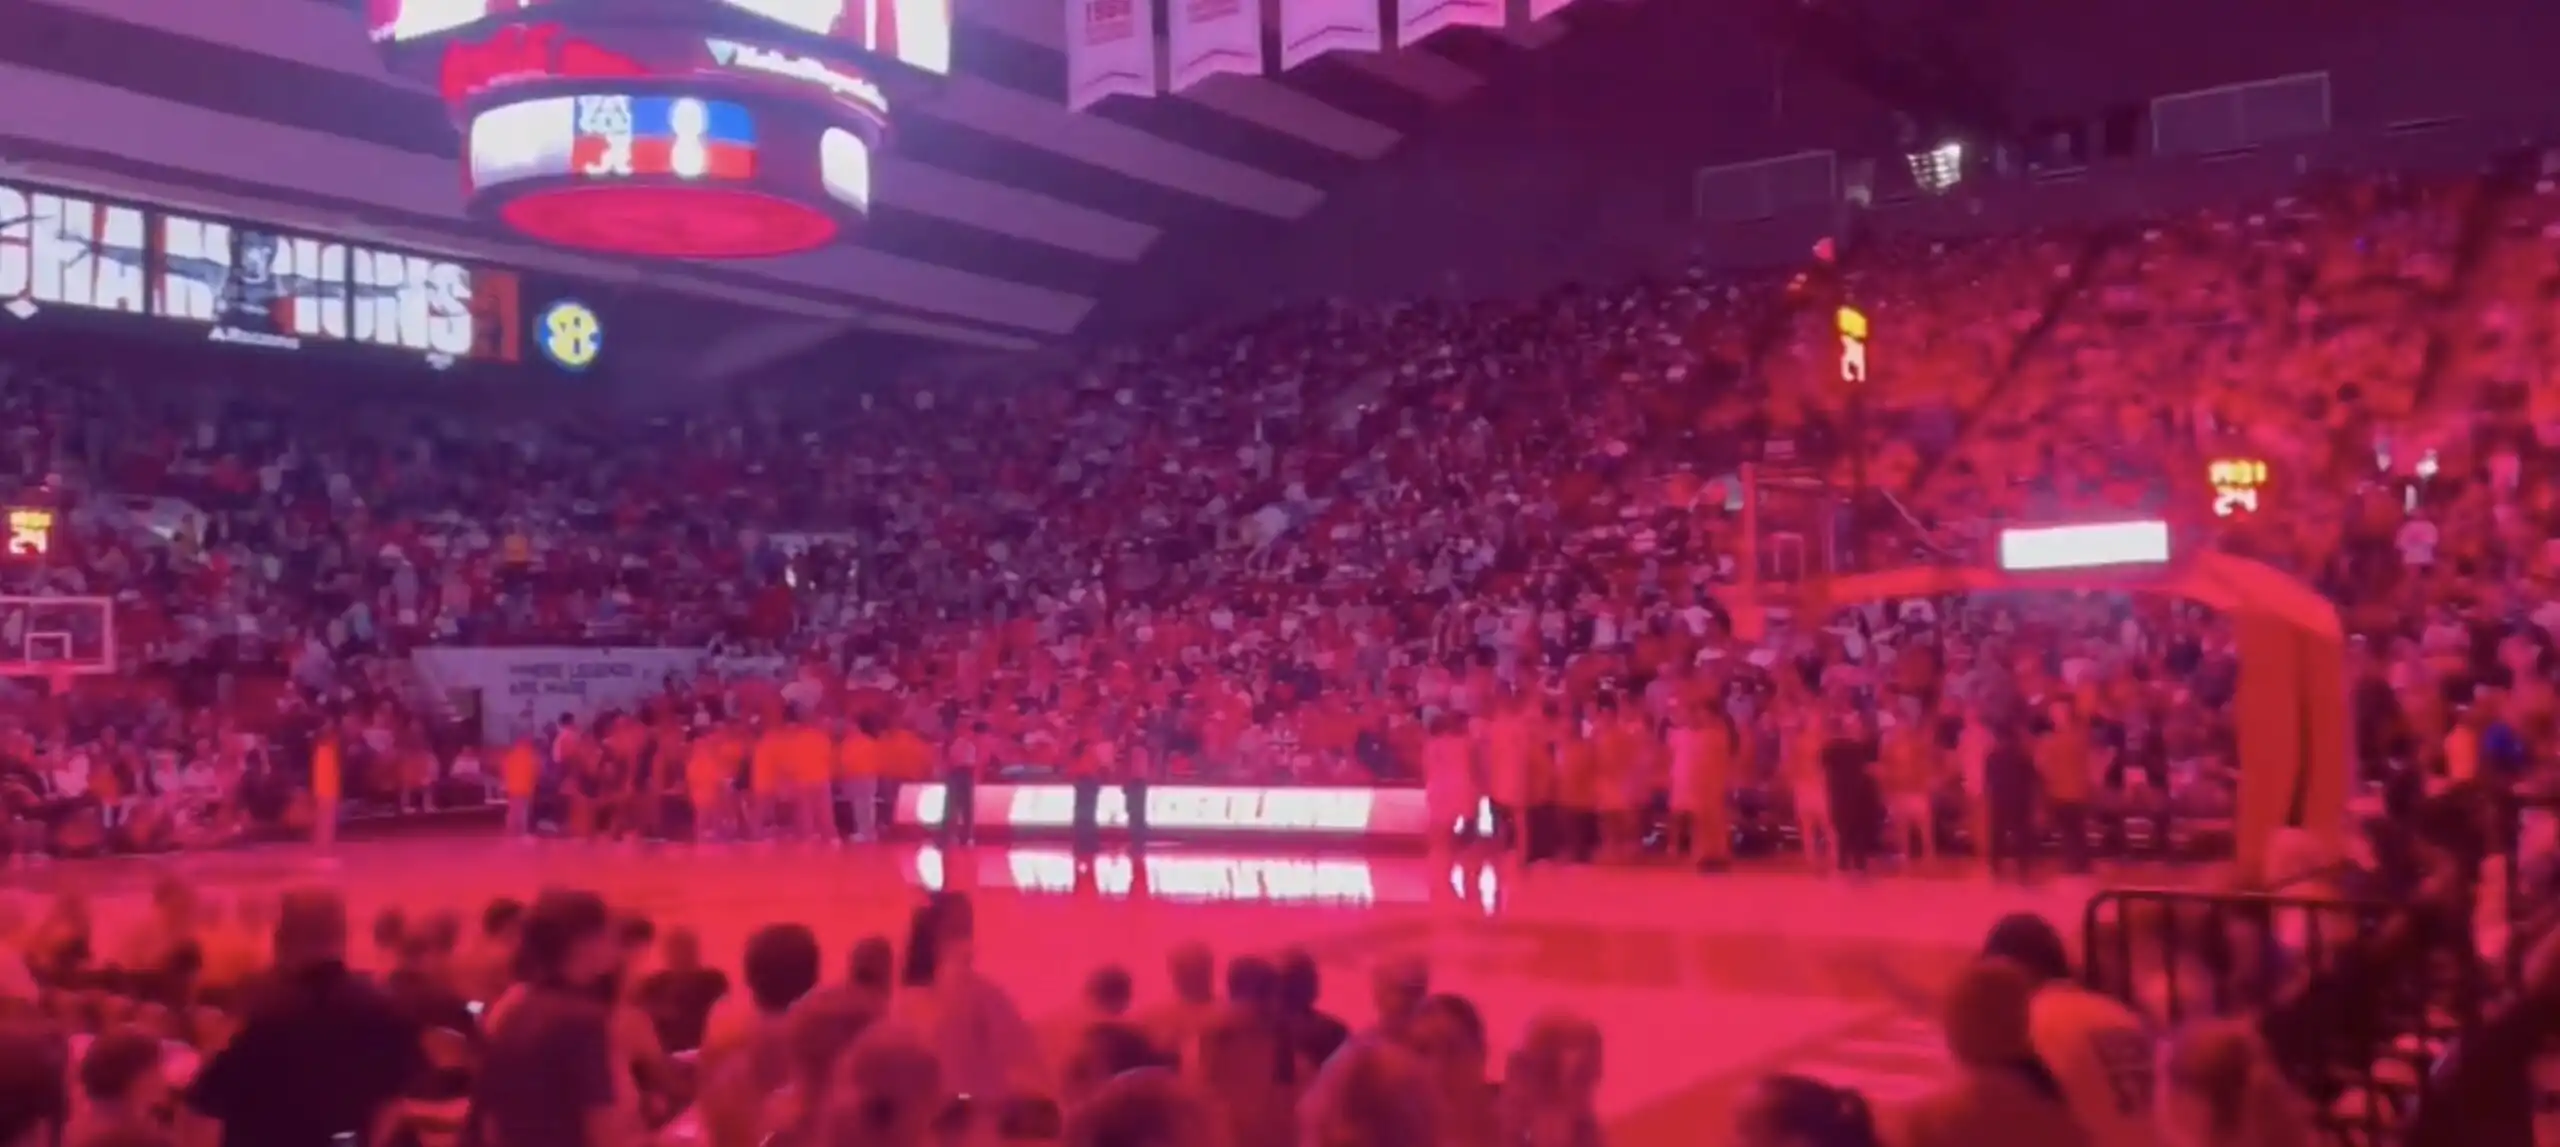 Alabama Auburn basketball game delayed by light malfunction, Tide fans chant F*ck You Auburn